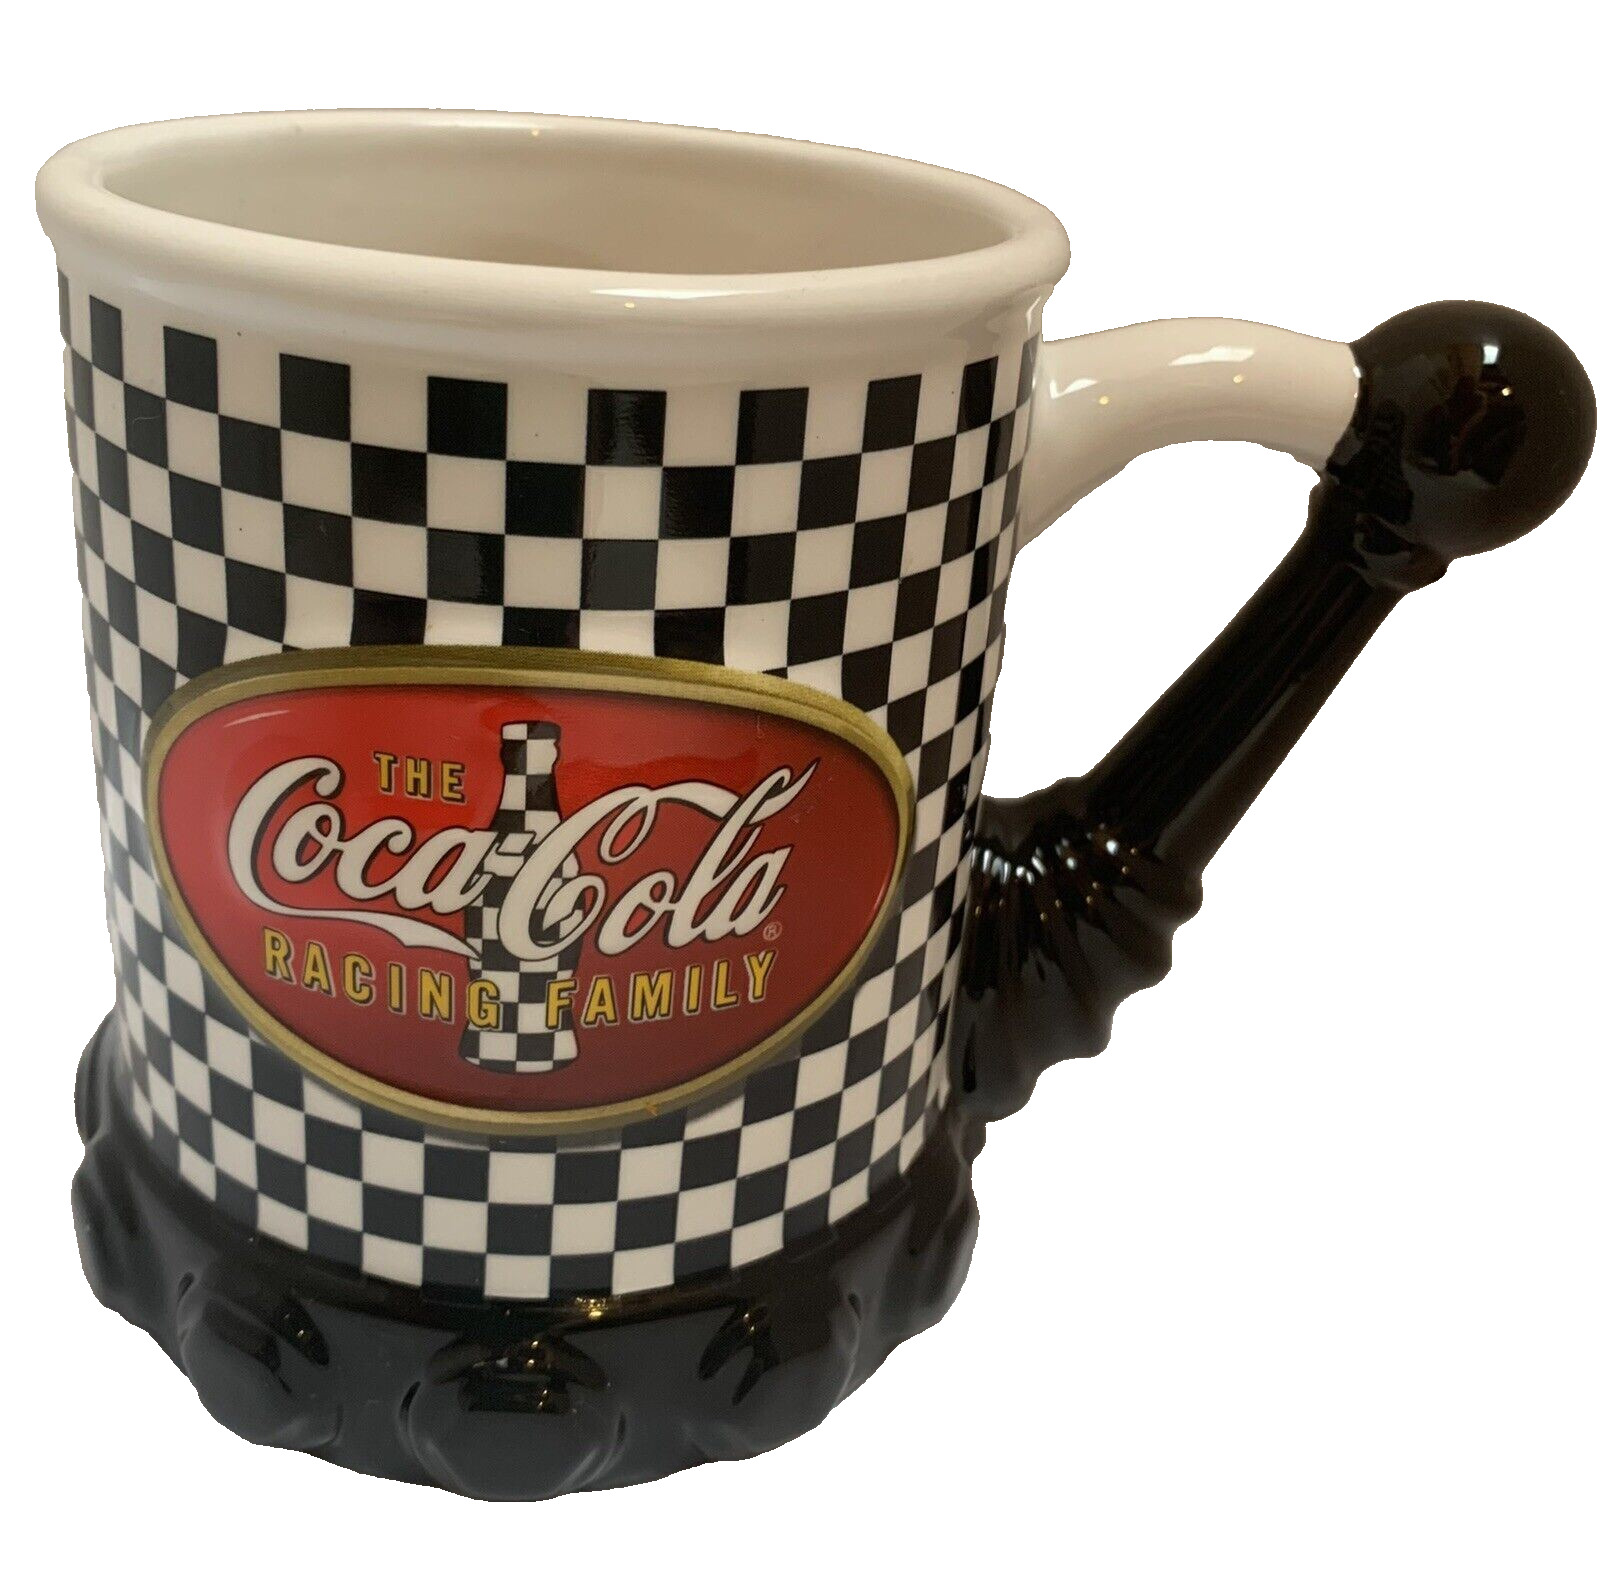 Coca Cola Coffee Mug Large Houston Harvest Gift Product NASCAR Racing Family Red